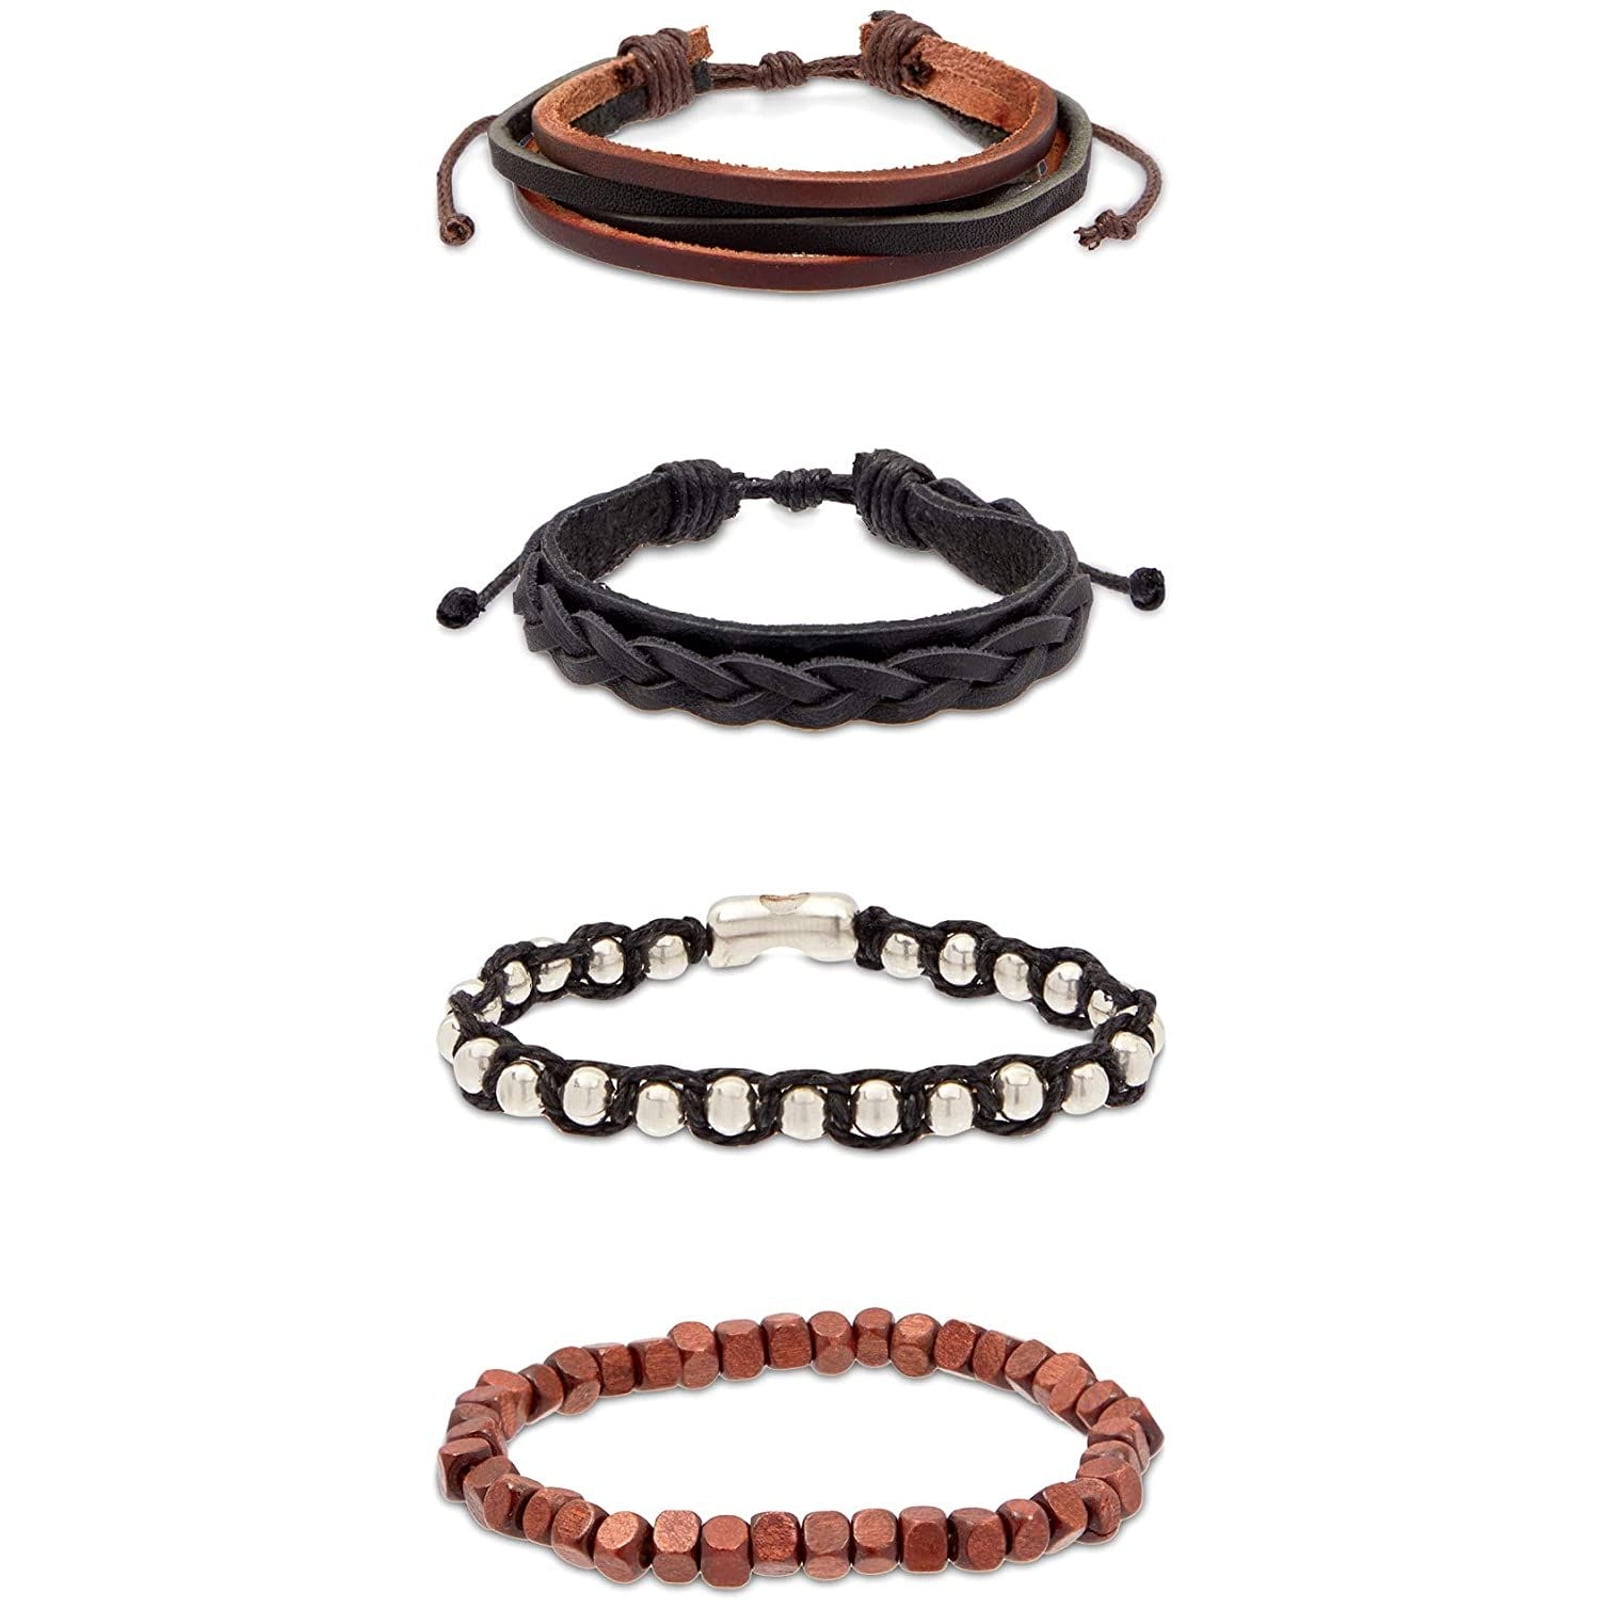 Black leather bracelet wristband 7" x 1/2" soft leather